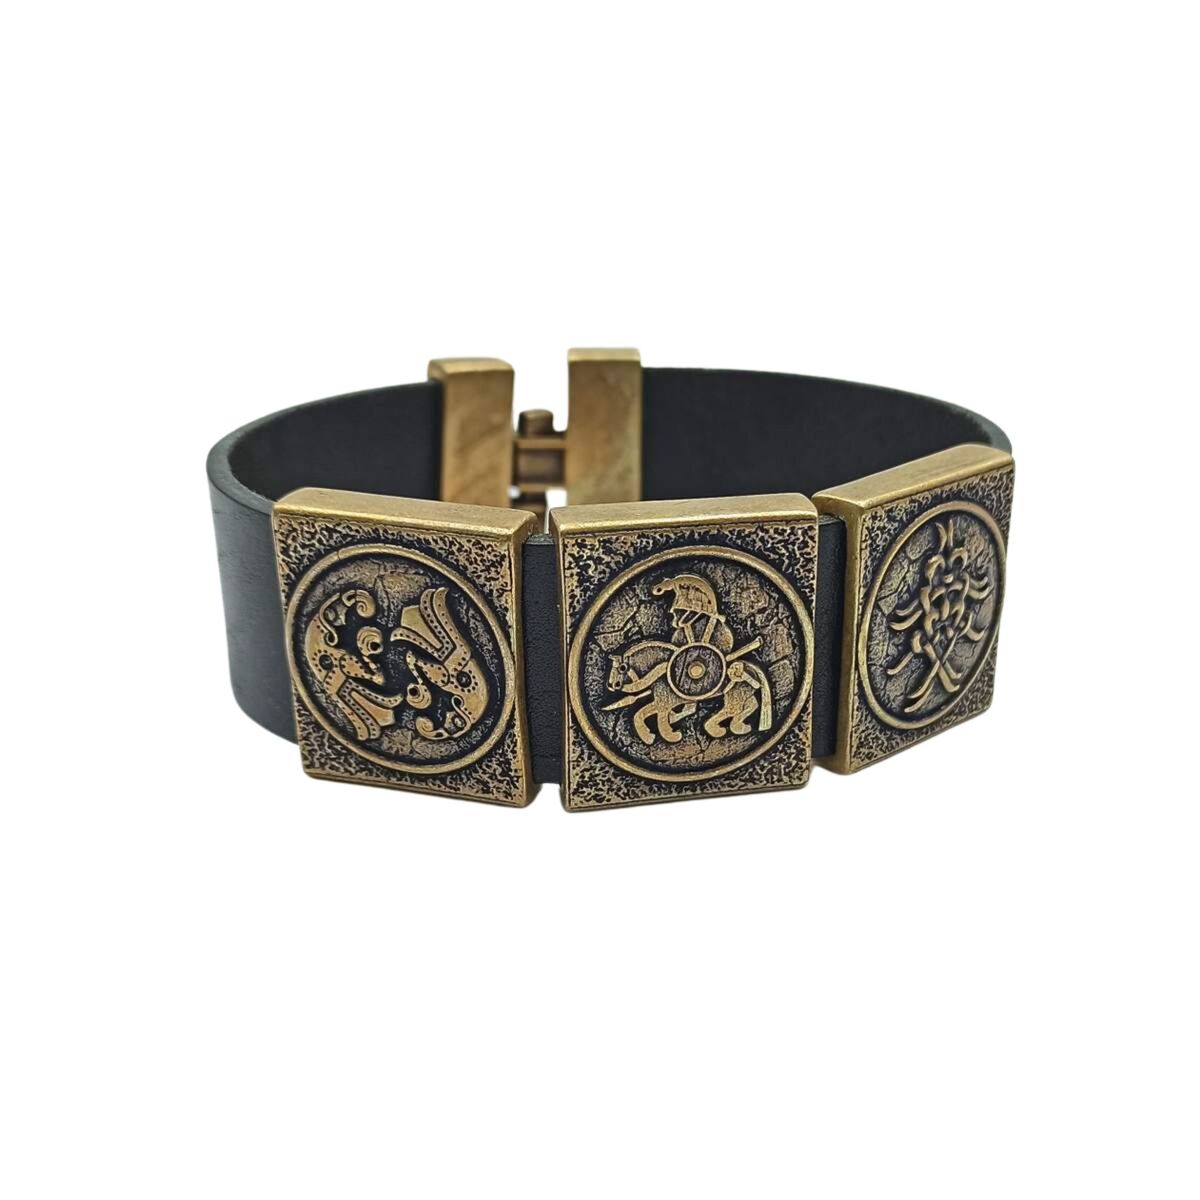 Odin leather wrist cuff bracelet